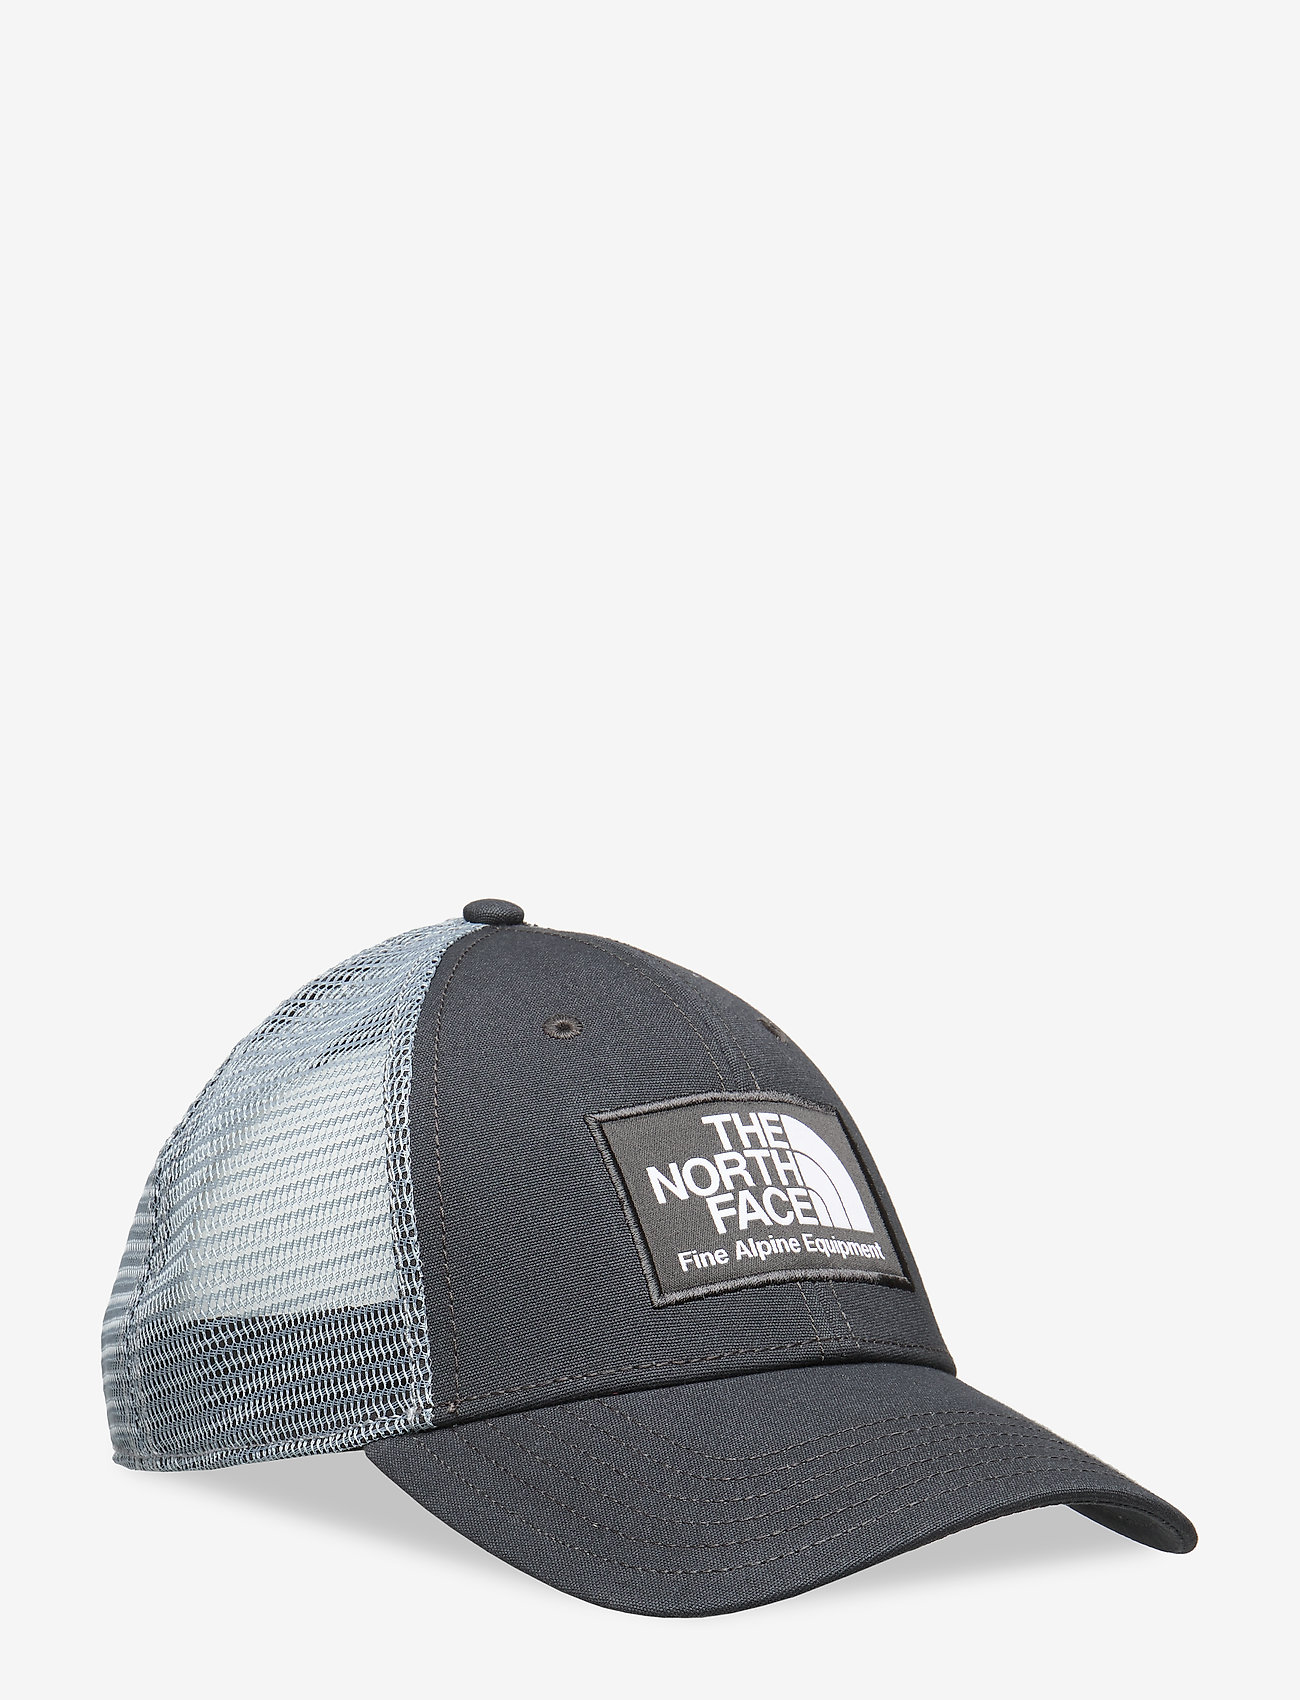 Mudder Trucker Hat (Asphalt Grey) (19 